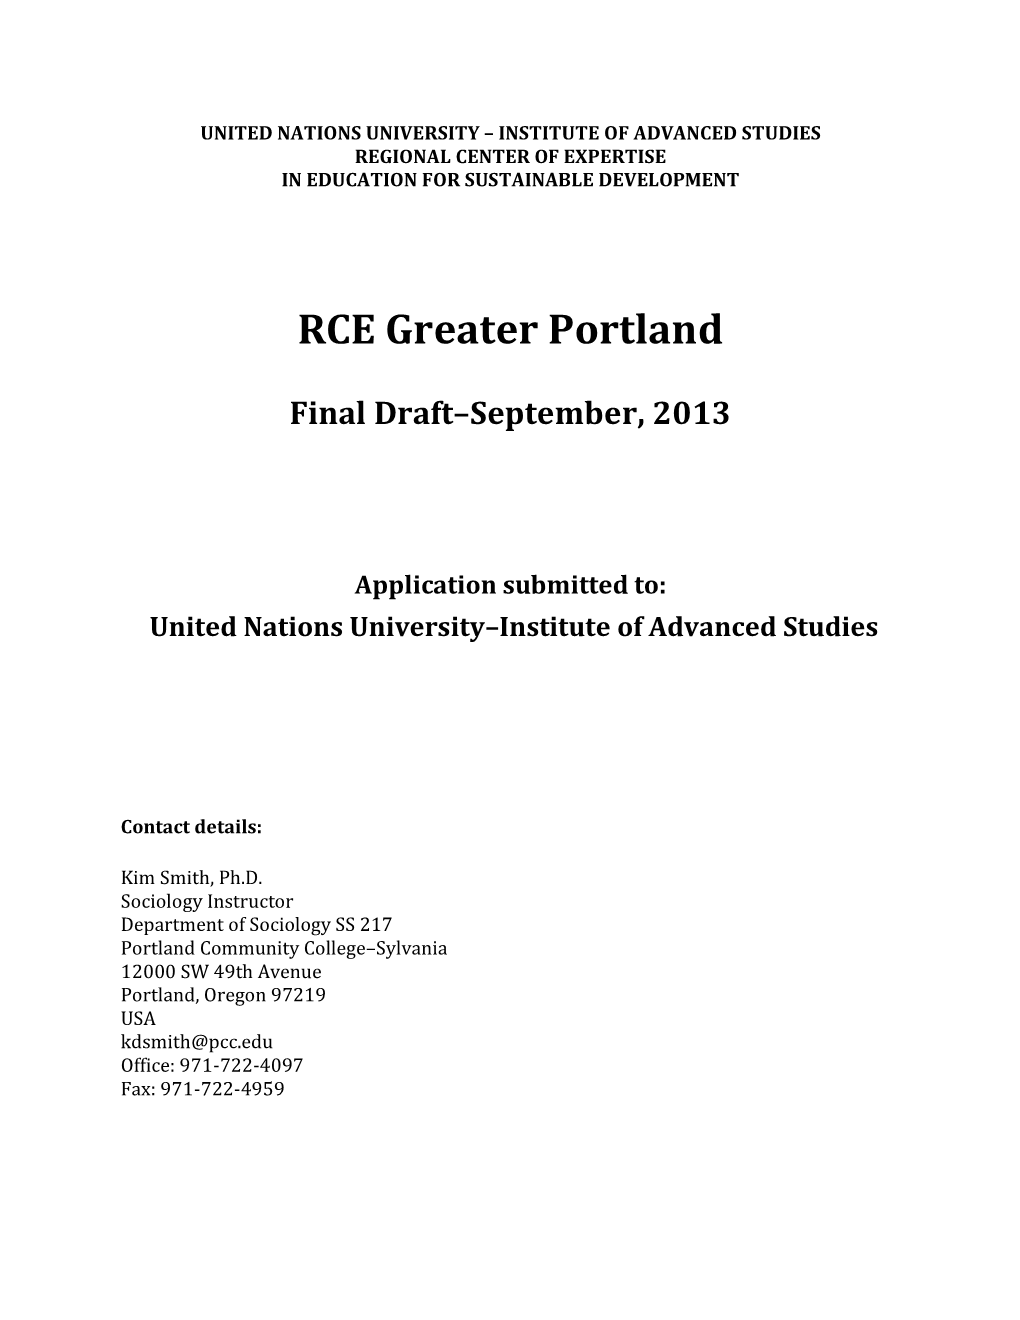 RCE Greater Portland